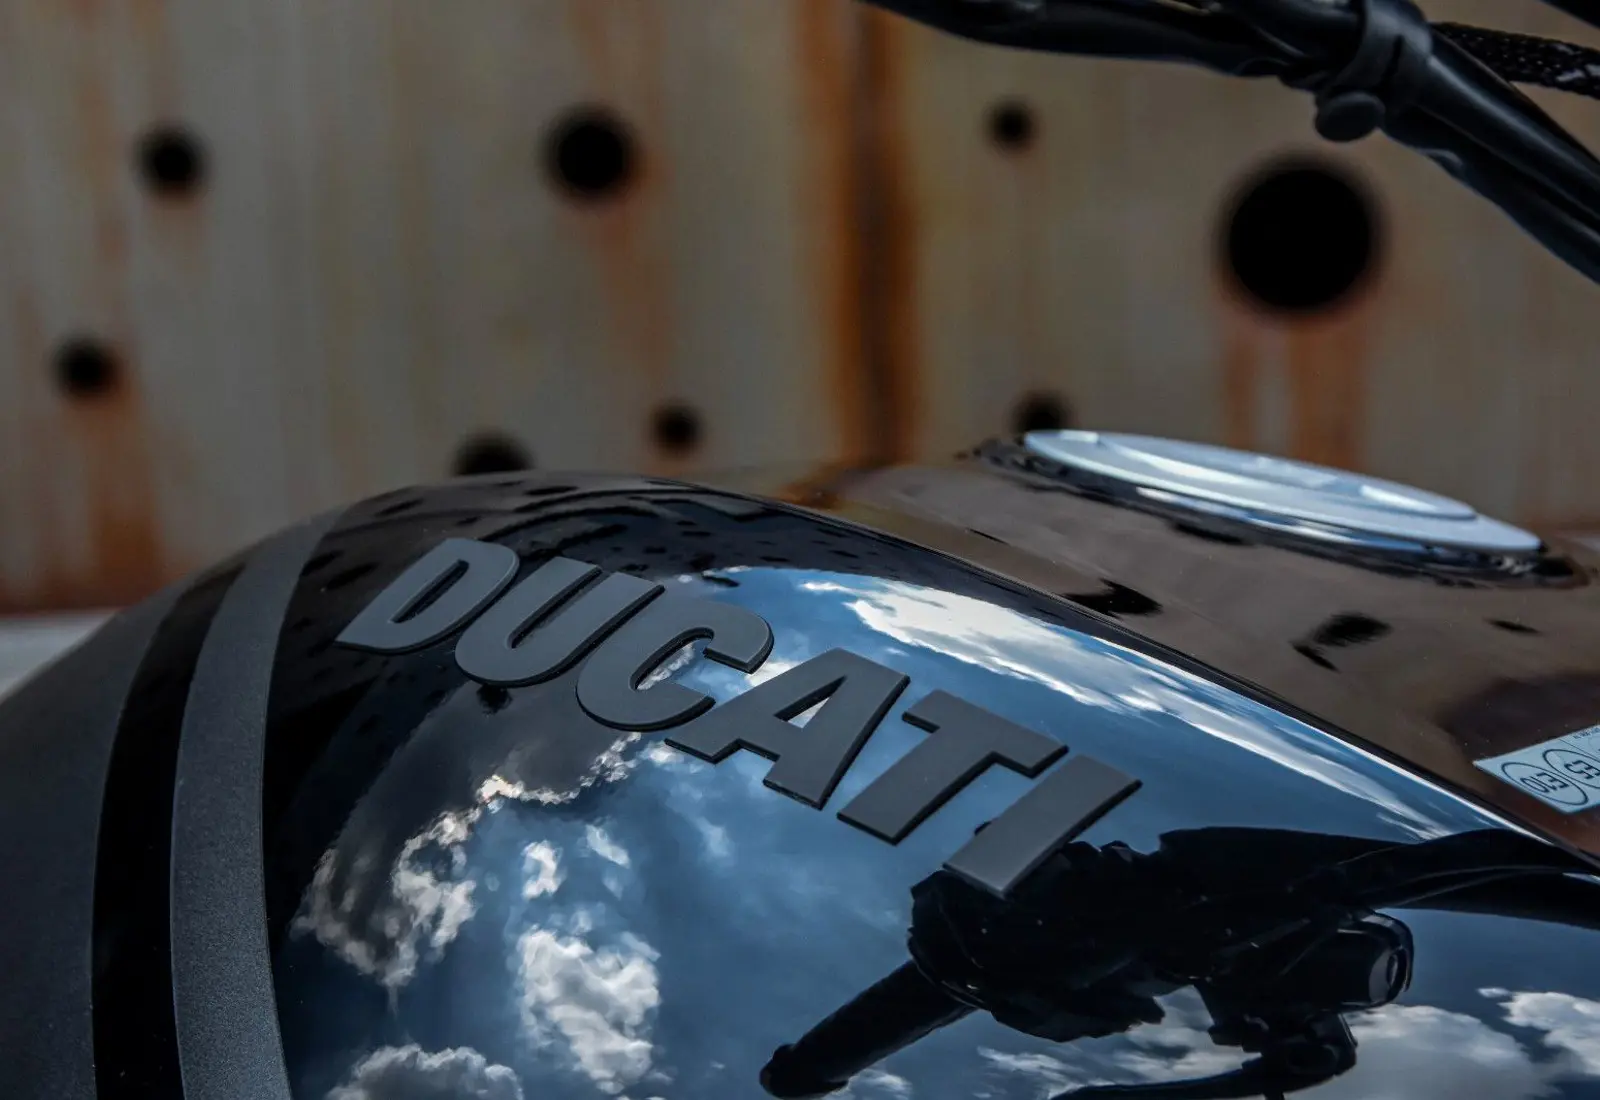 Ducati X-Diavel Nera * POLTRONA FRAU * 1 OF 500 * LIMITED ED - 44498